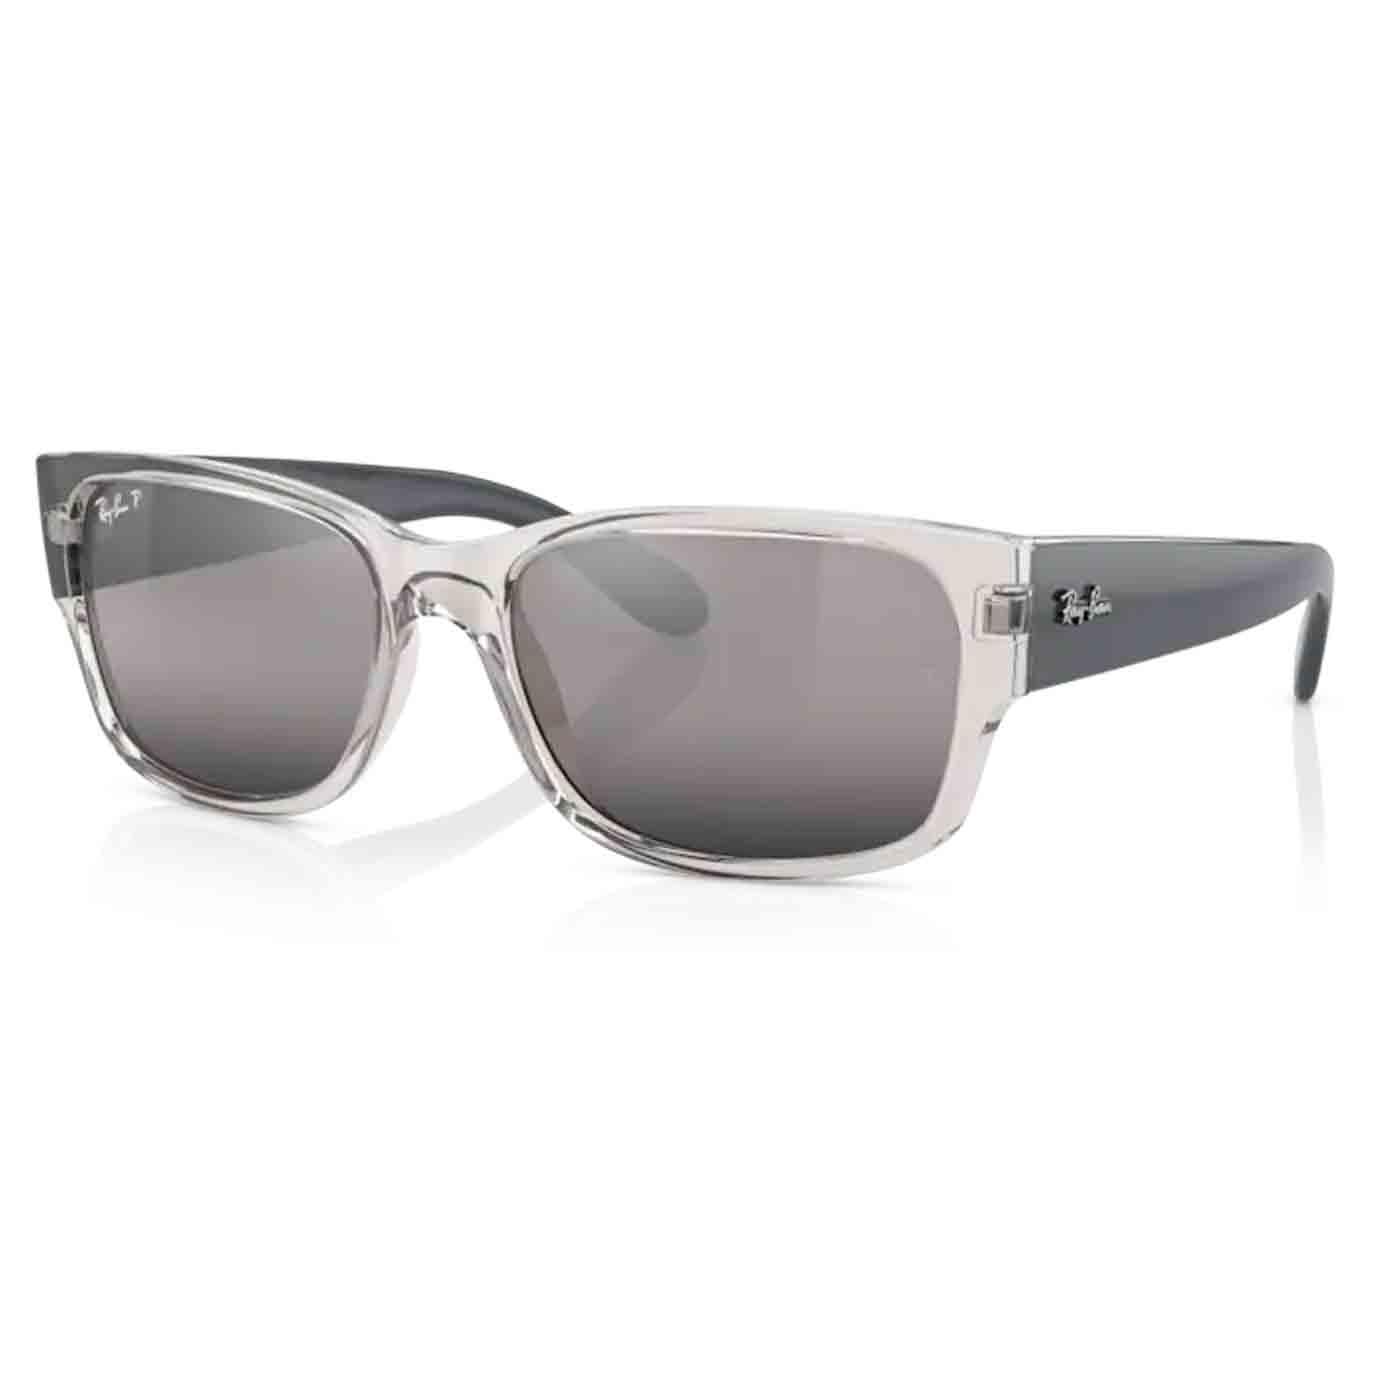 RB4388 Ray-Ban Retro 90s Sunglasses Grey